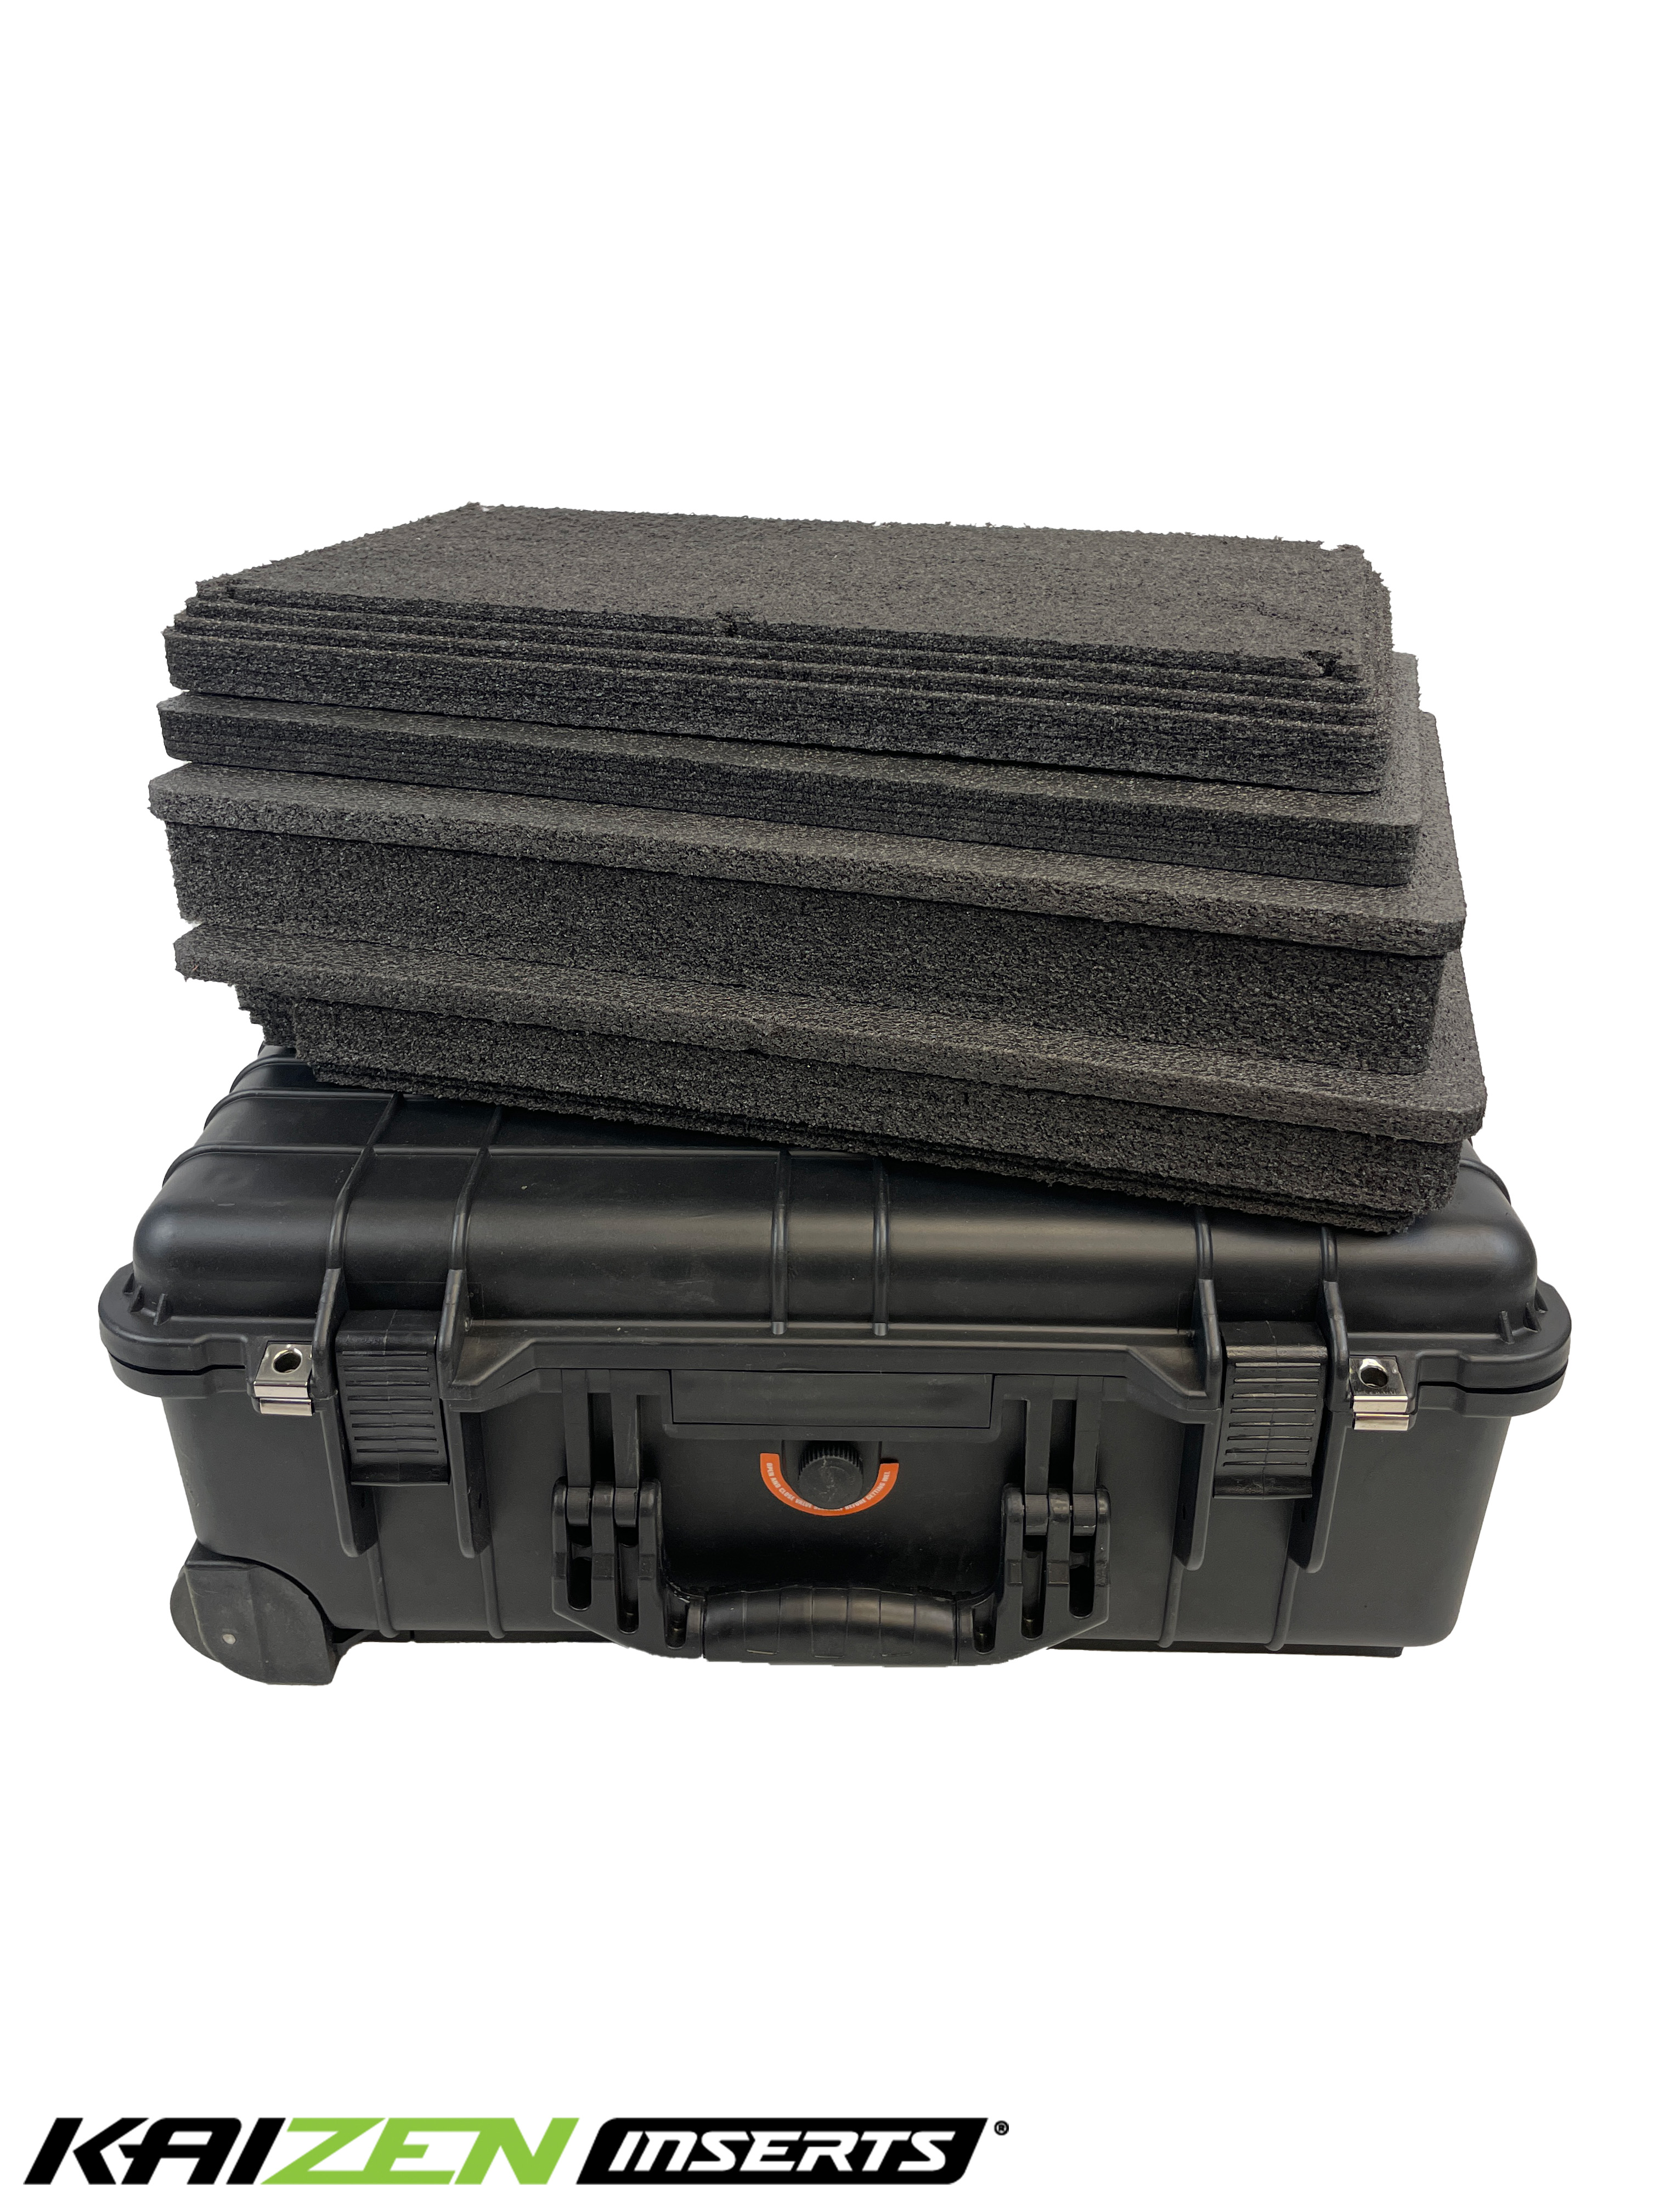 Apache Watertight Protective Hardcase with Customizable Foam Insert 16-5/16